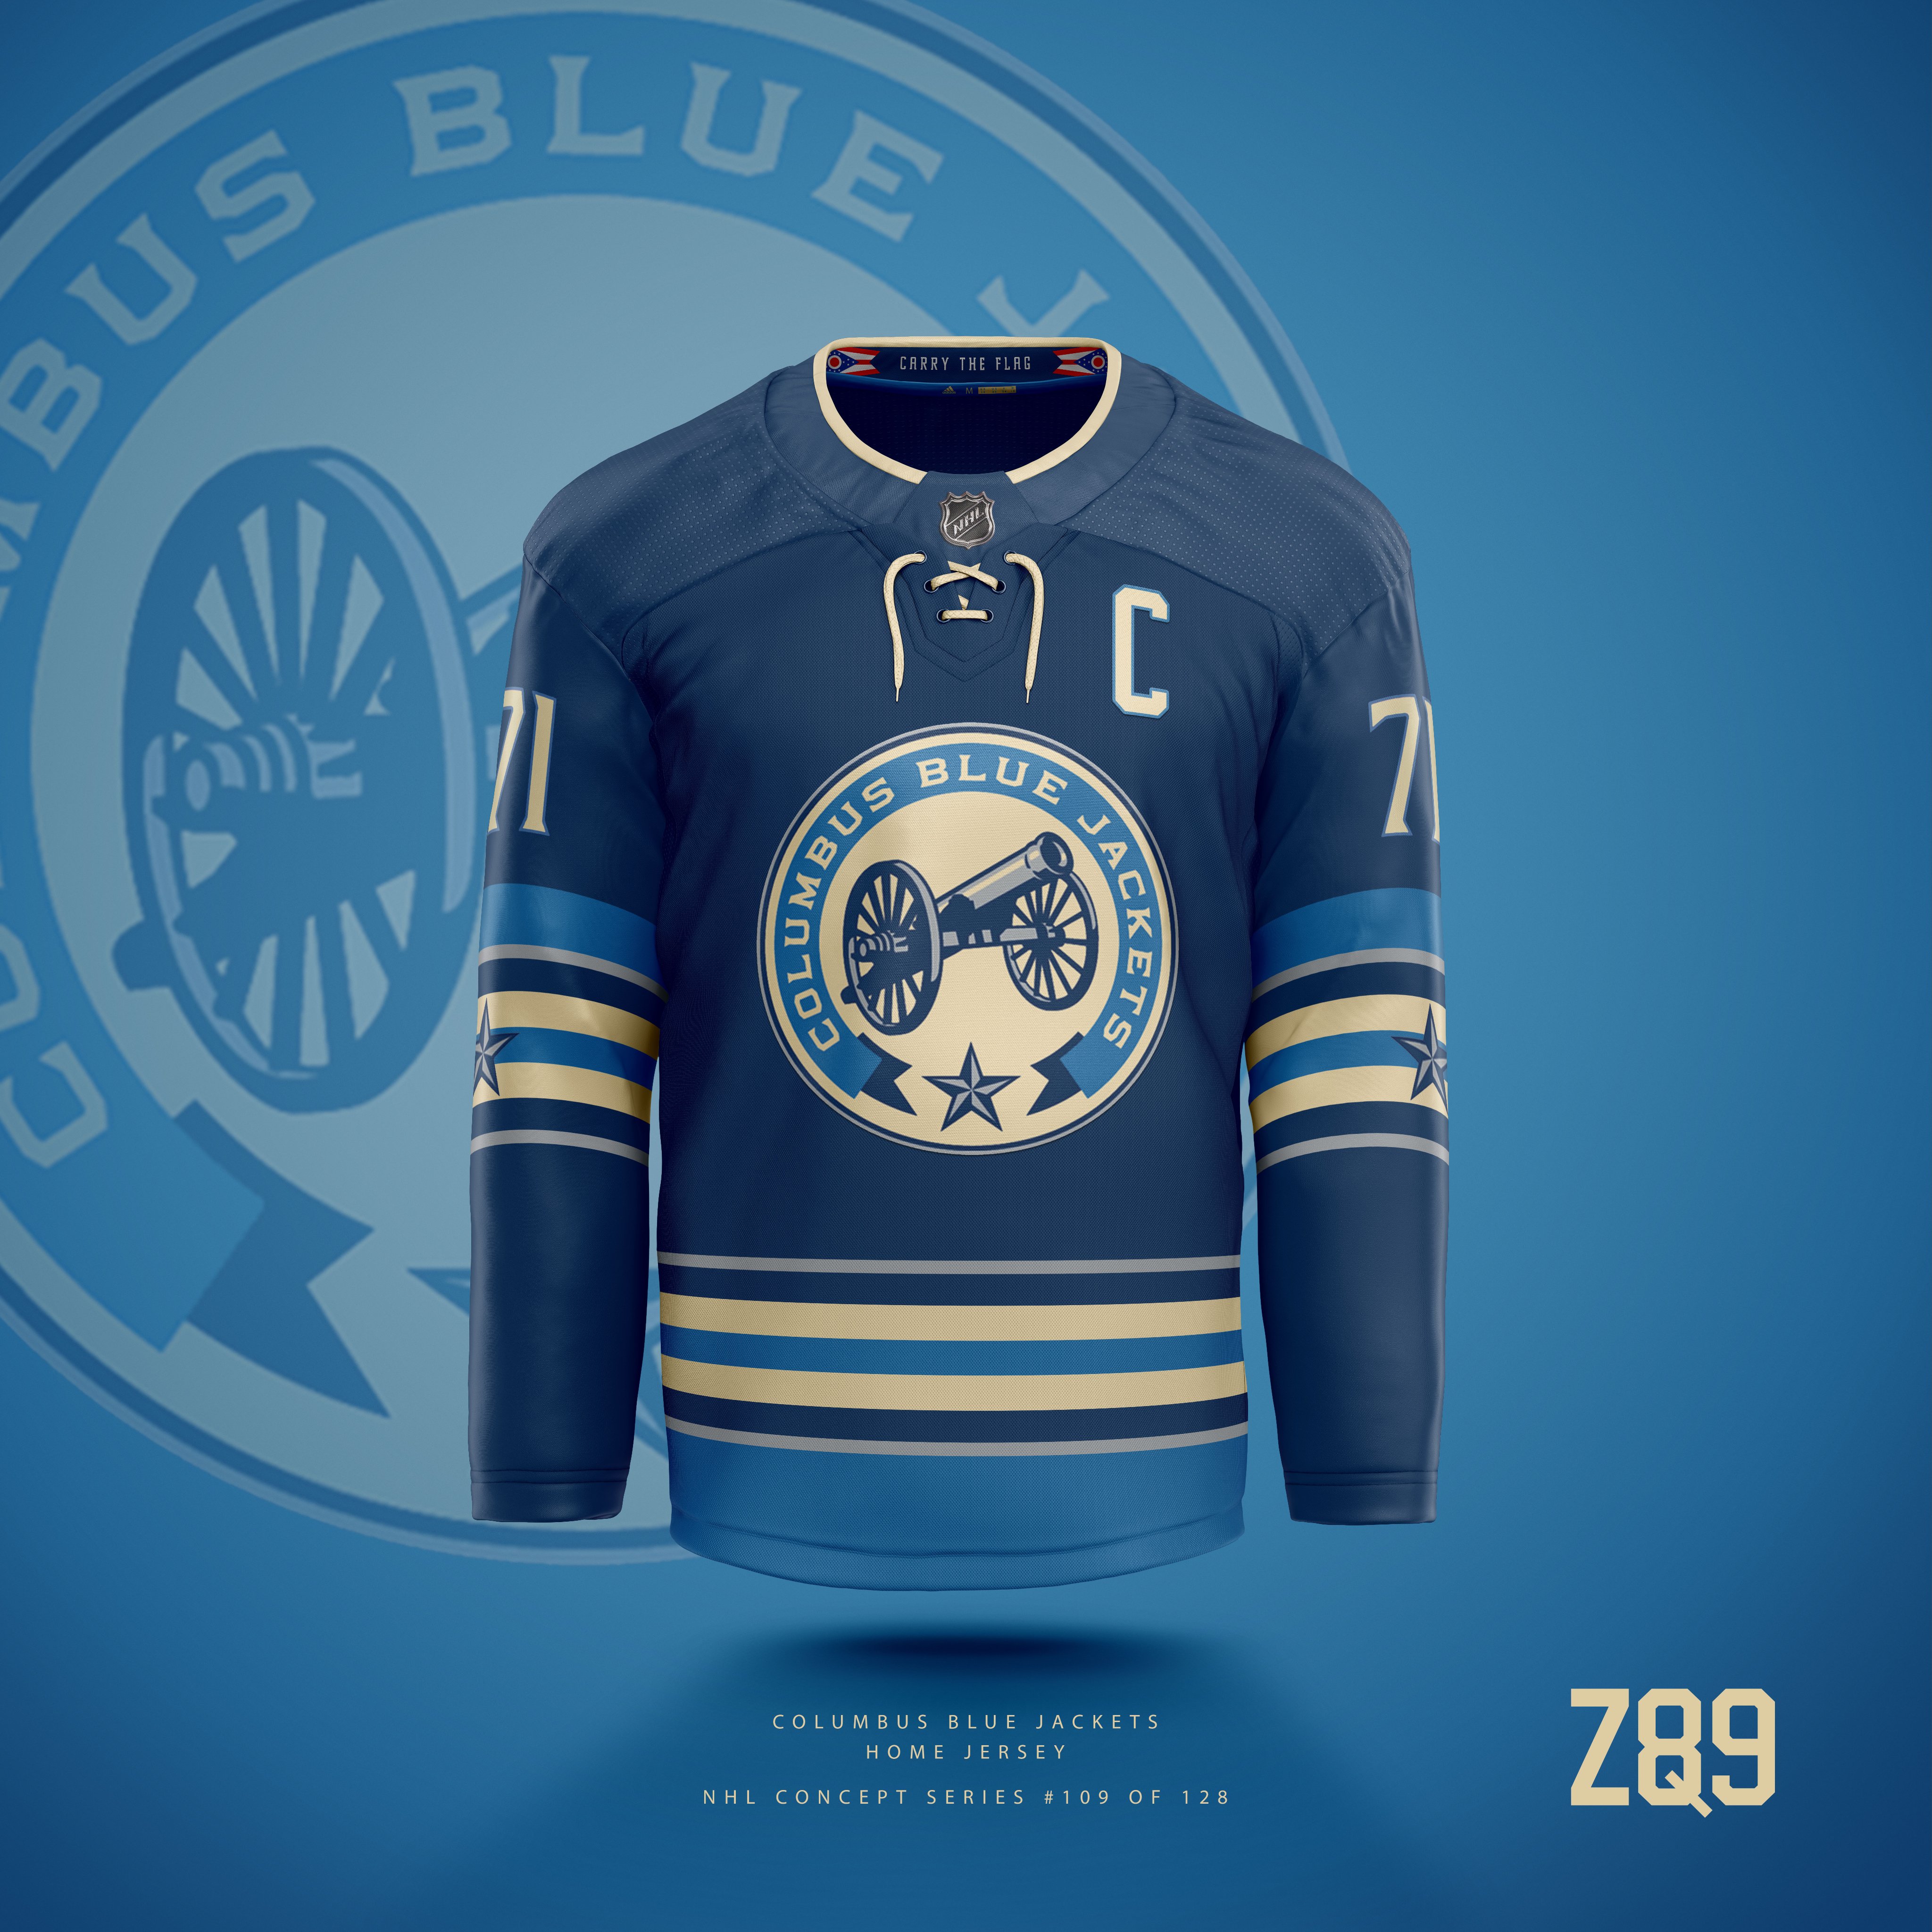 Columbus Blue Jackets concept jersey - home